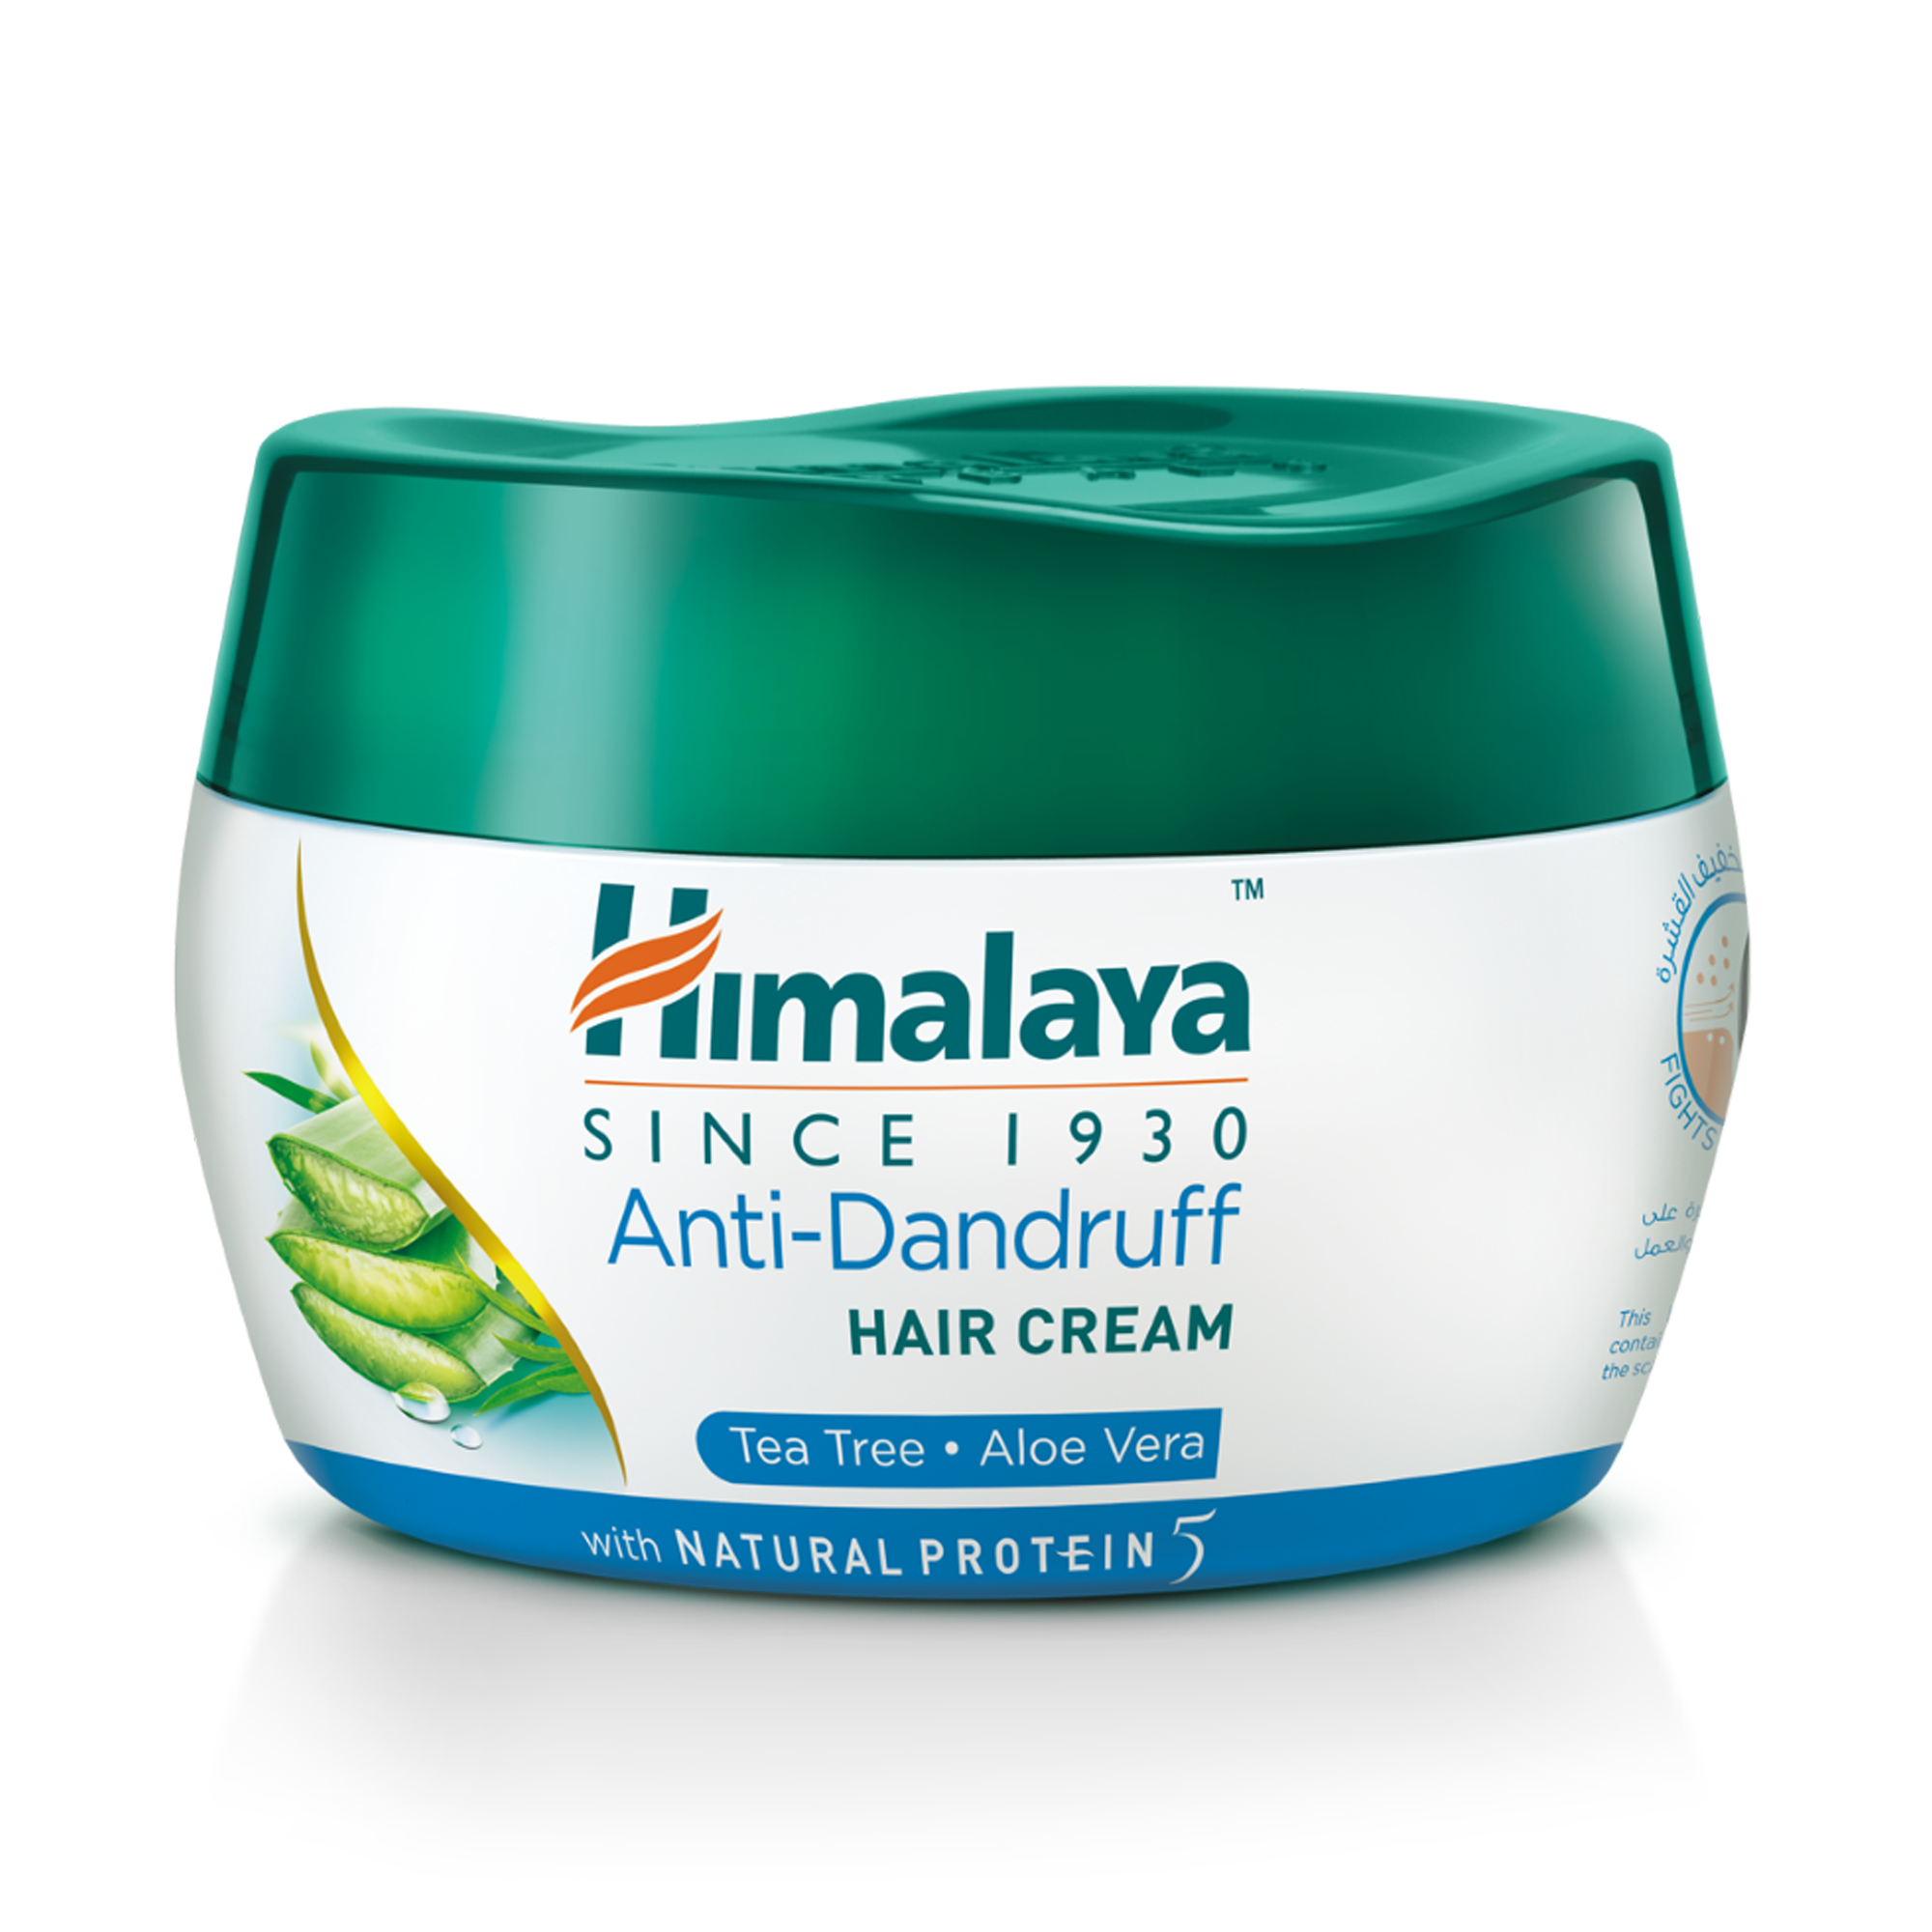 Himalaya Anti Dandruff Hair Cream 140ml - Removes Dandruff